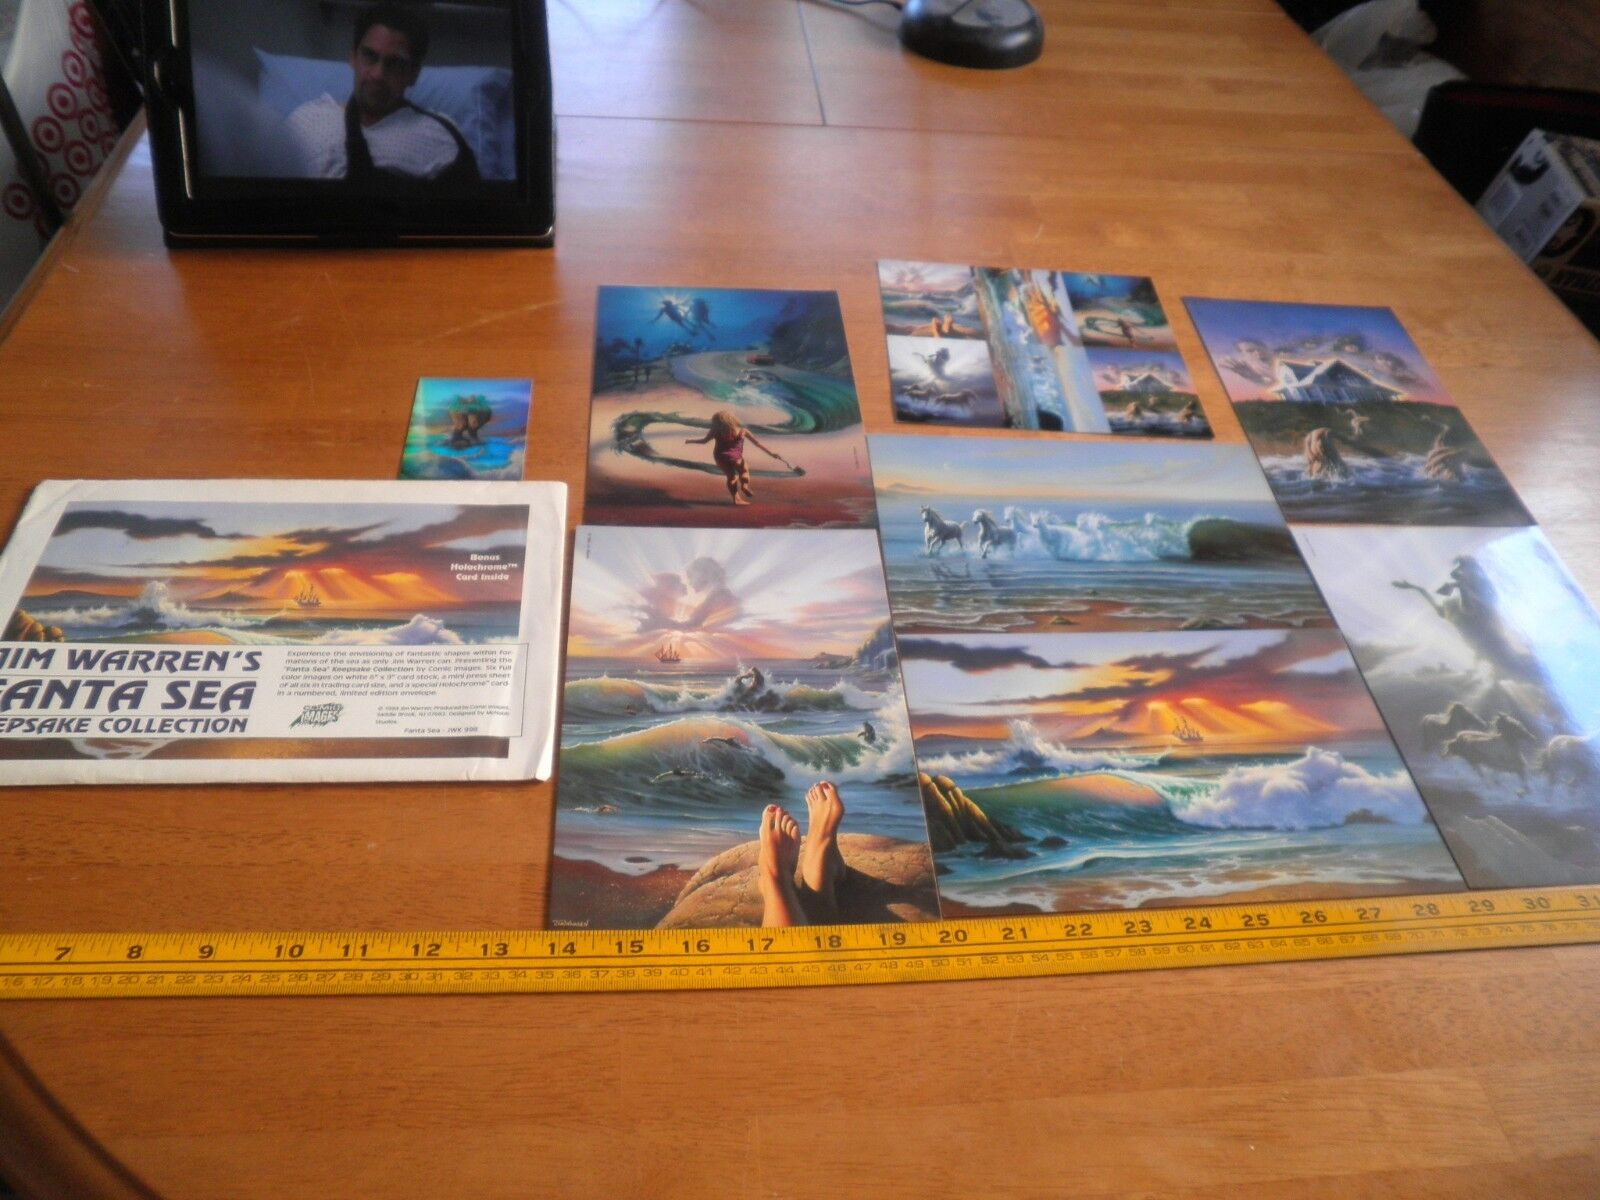 1994 Jim Warren's Fanta Sea Keepsake collection 7 cards in envelope #646